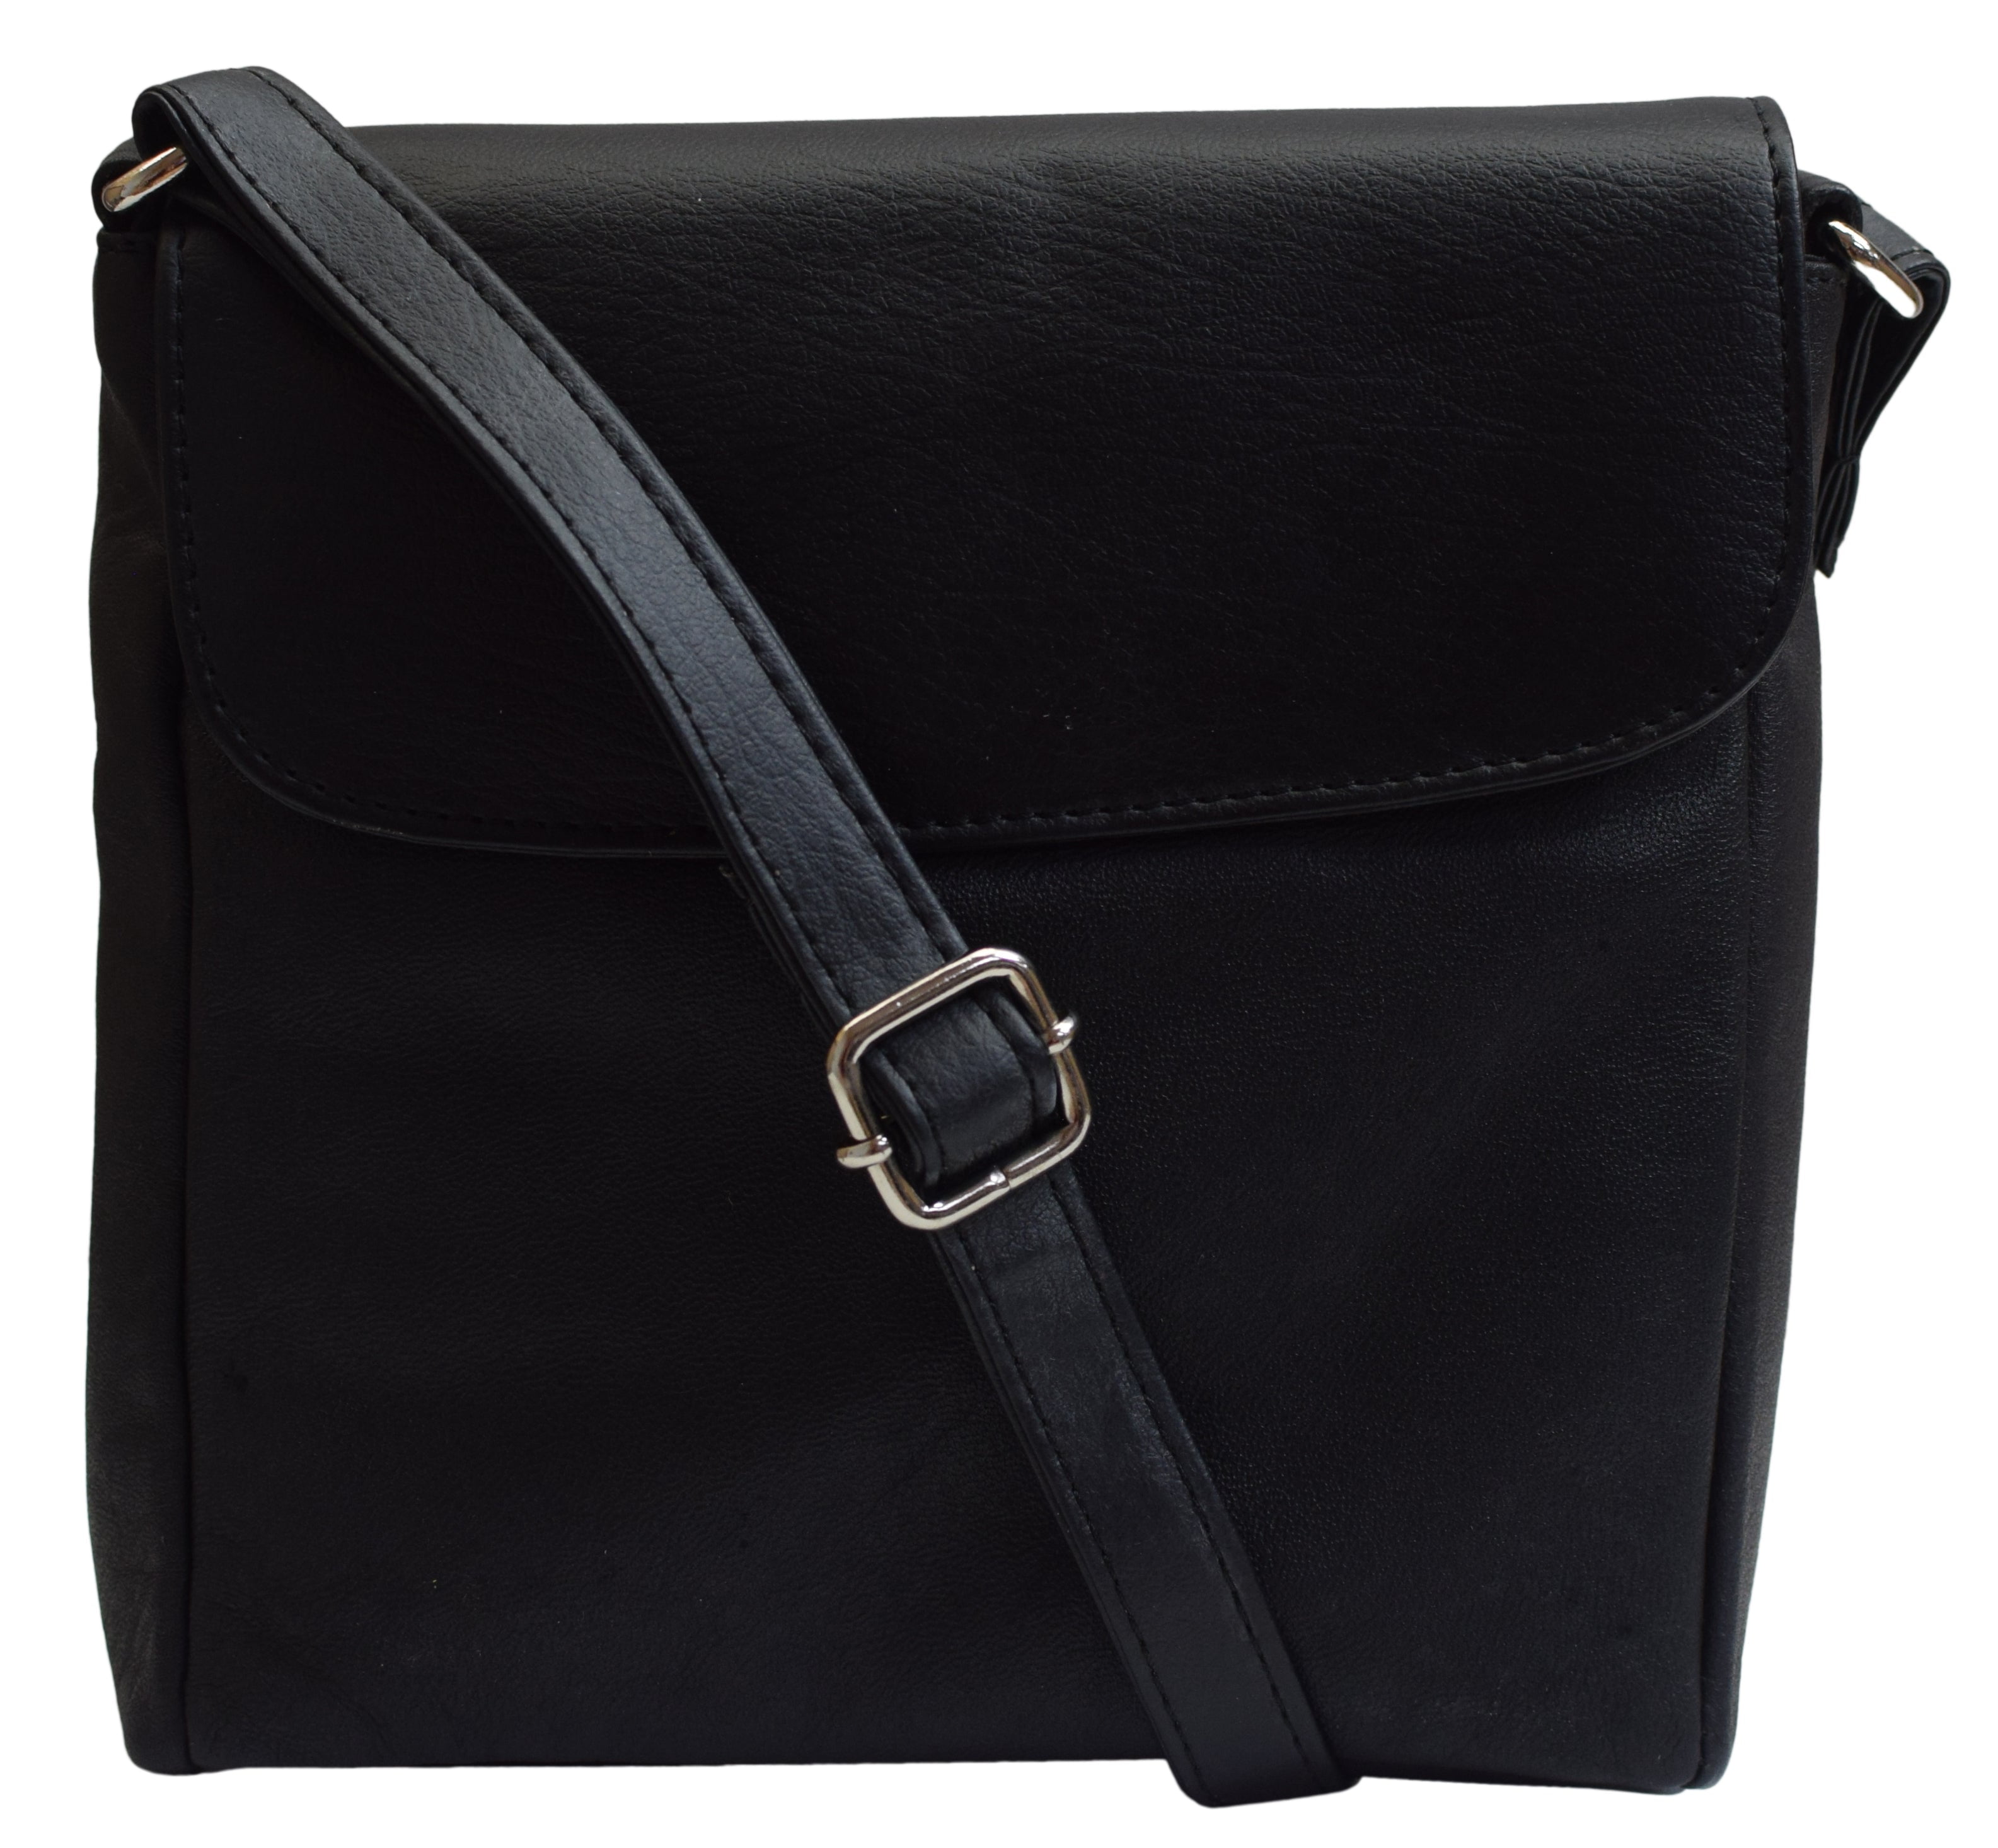 Crossbody Bag Leather Black Women's Purse Handbag Ladies Shoulder Bag ...